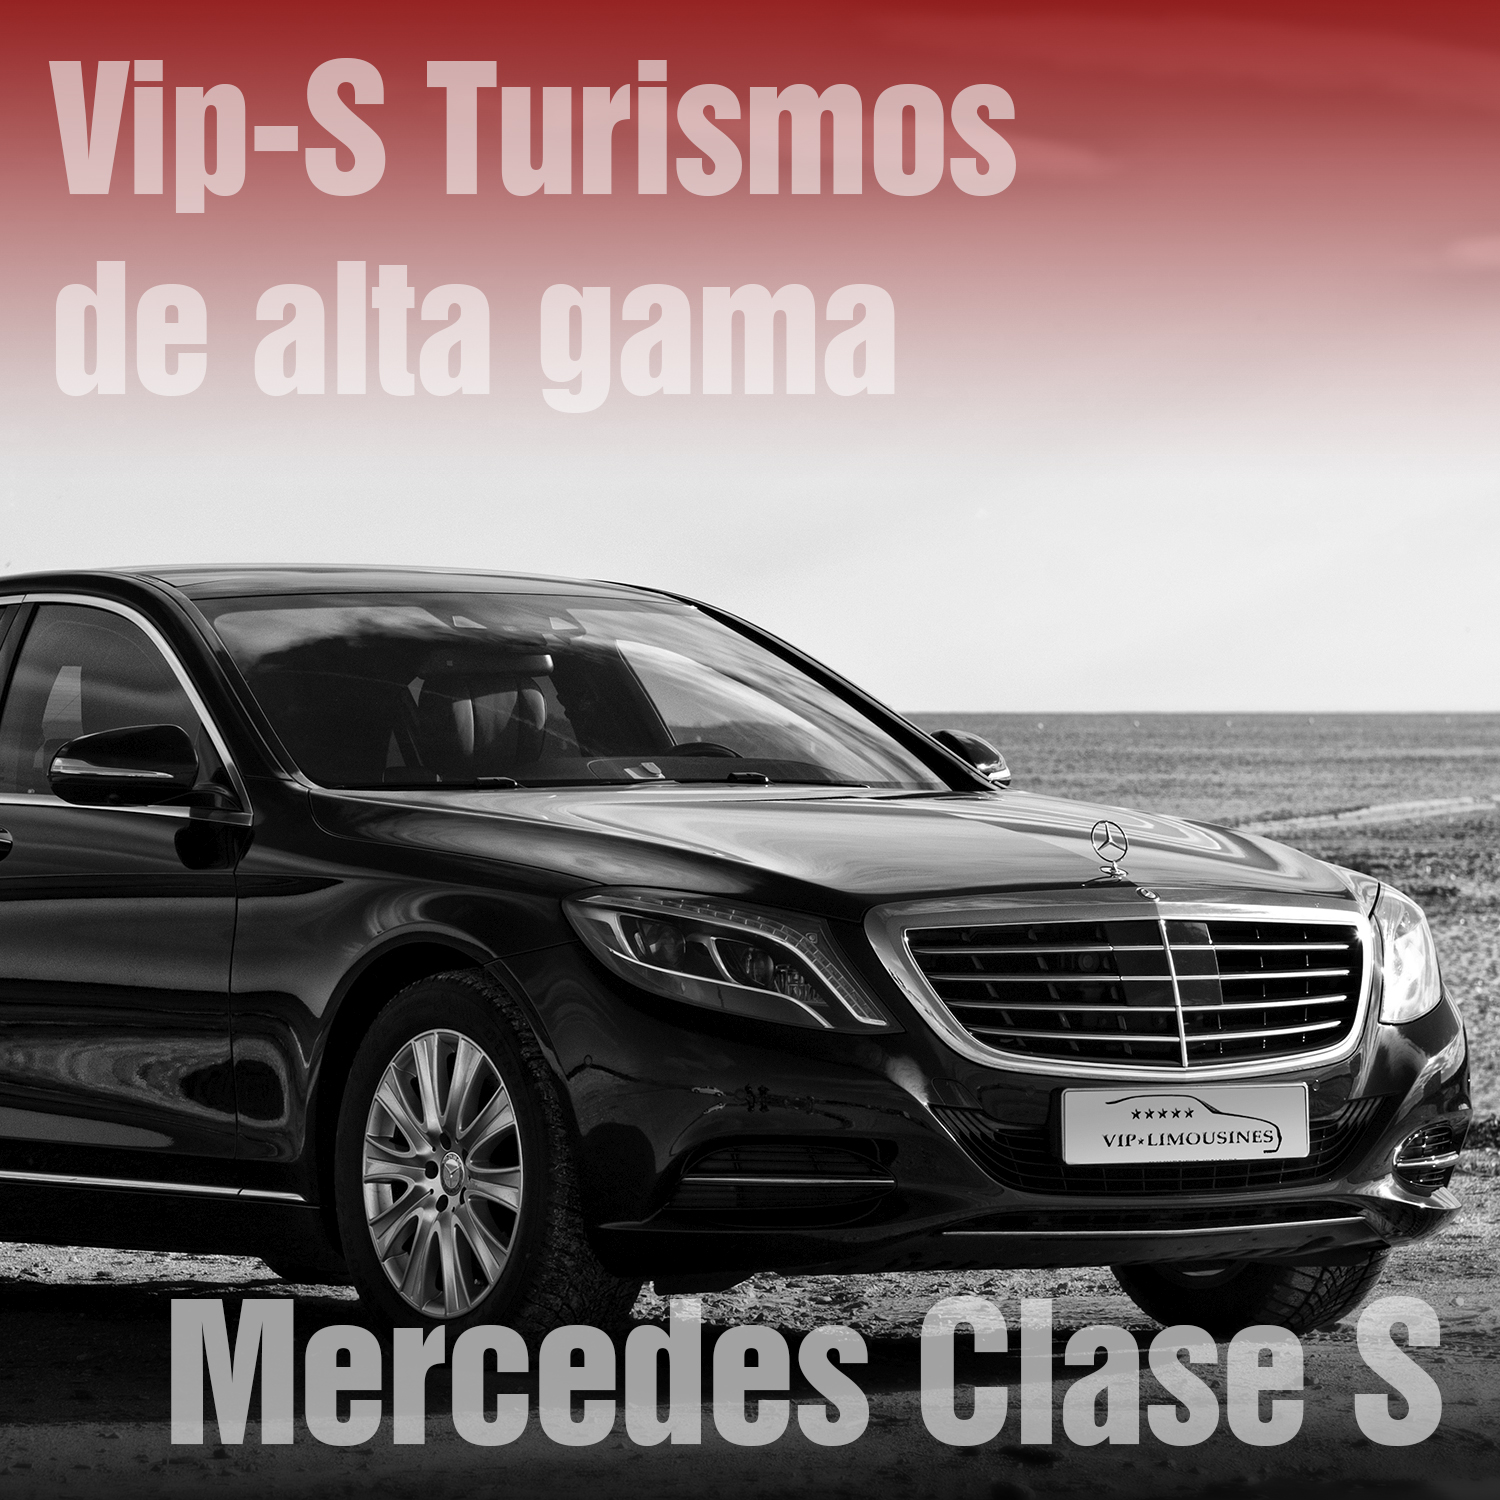 Mercedes Classe S VIP